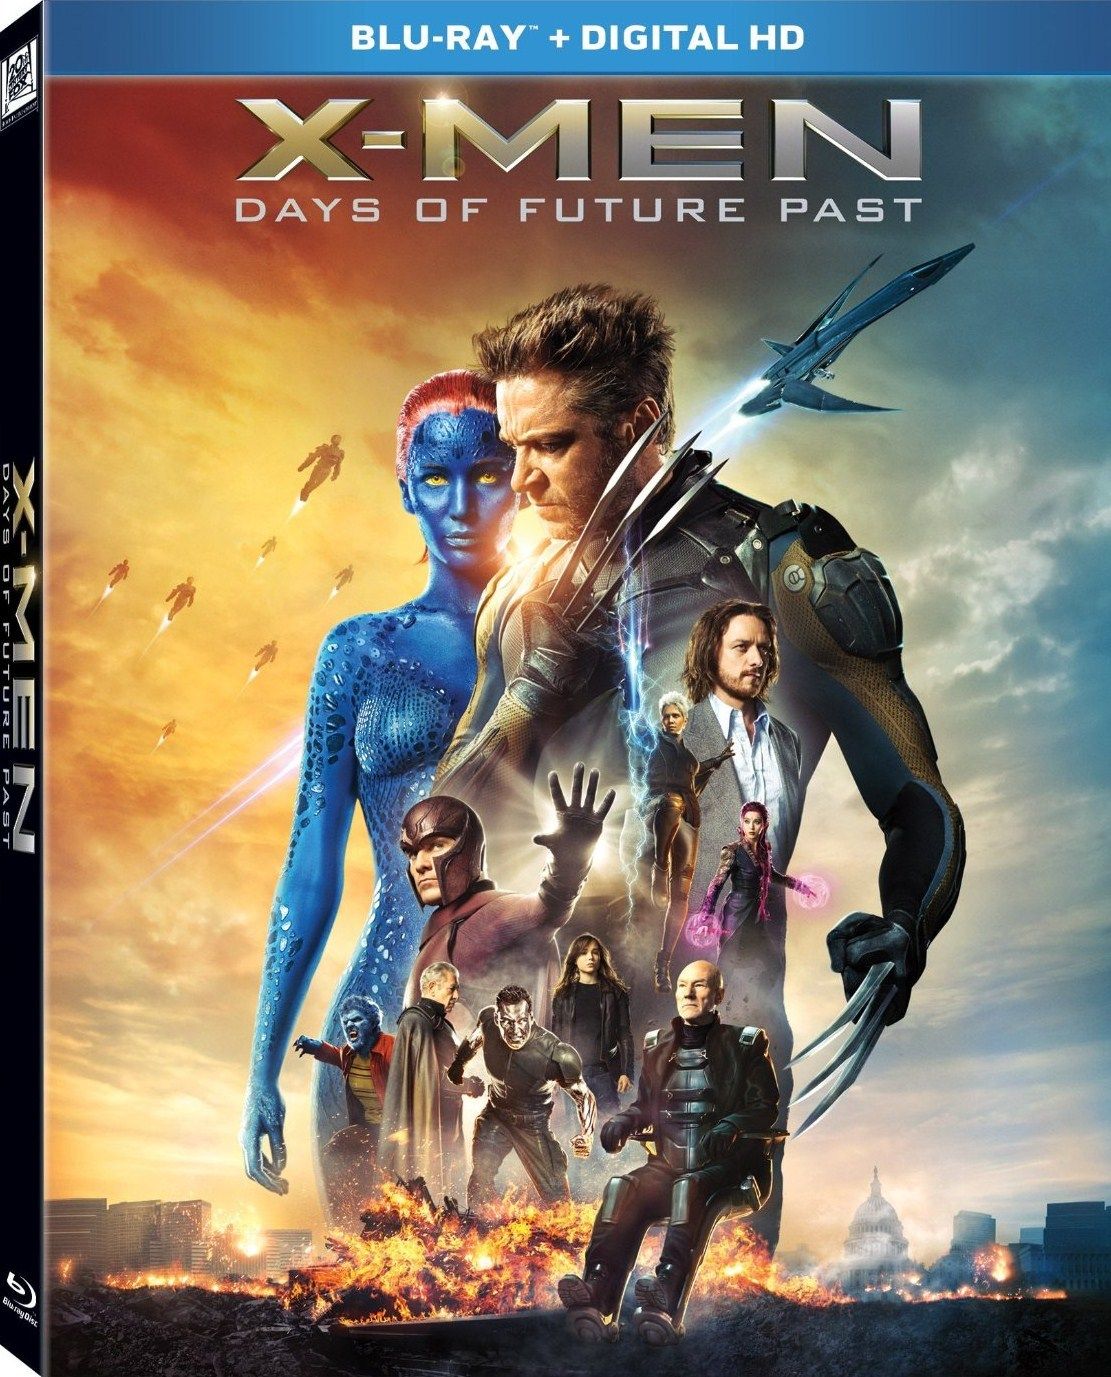 X-Men Days of Future Past Blu-ray pre-order#4